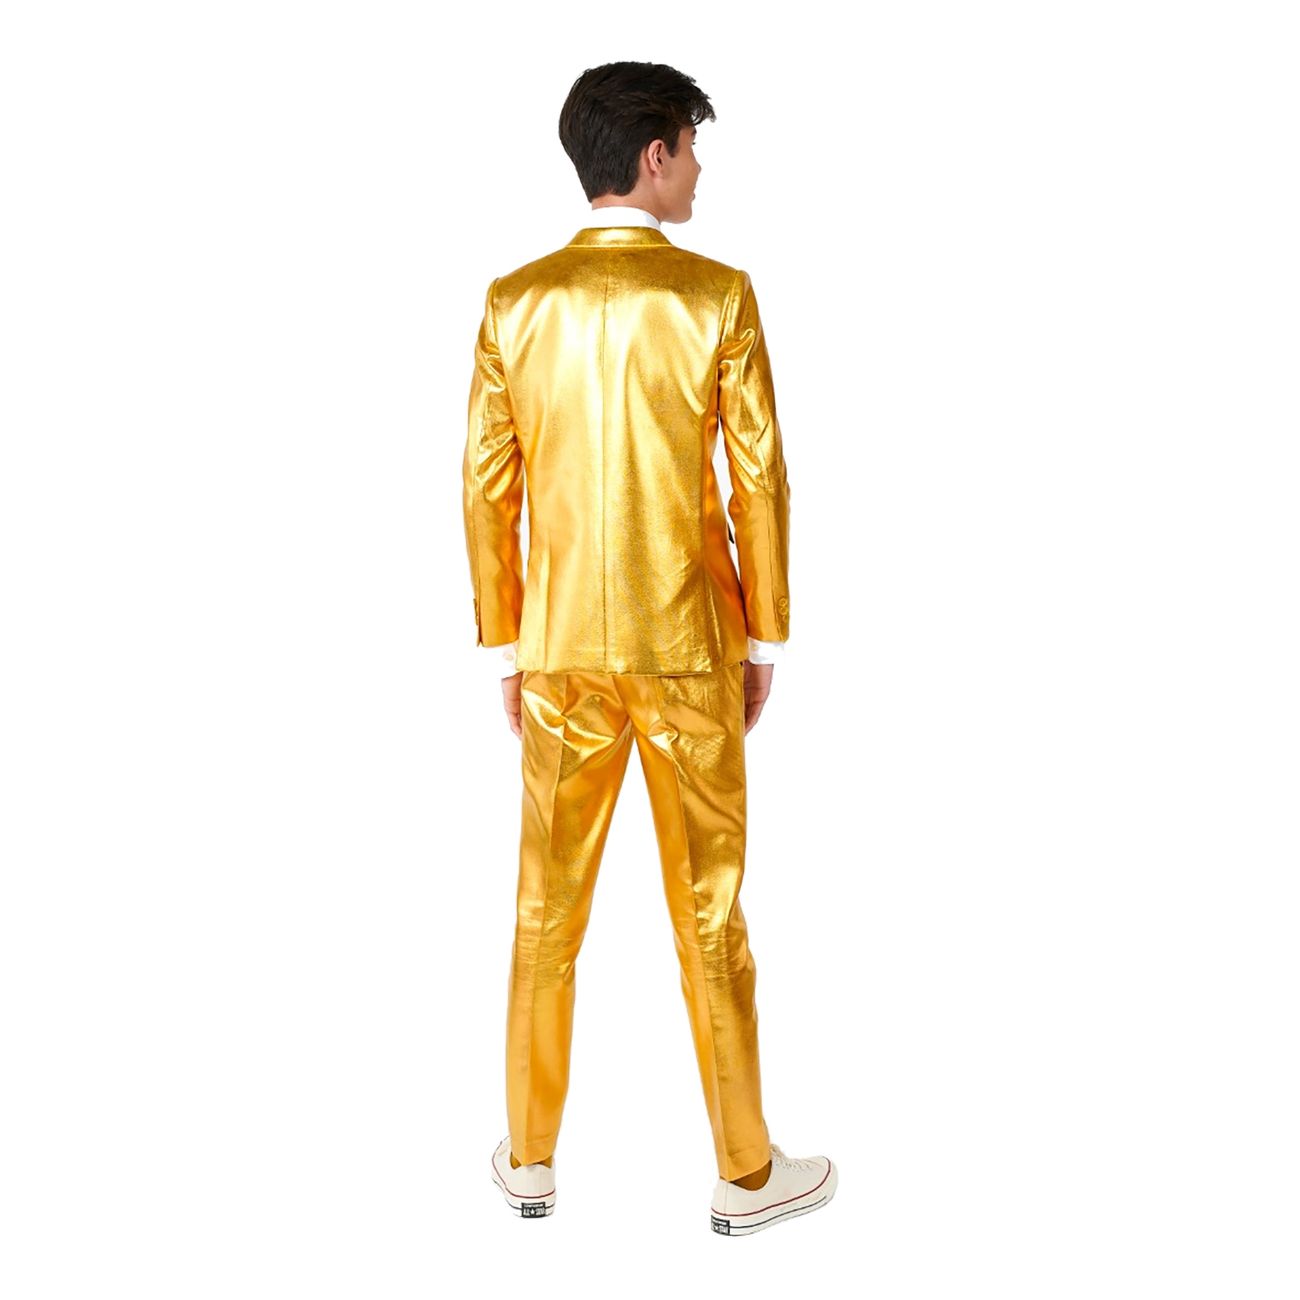 opposuits-teen-groovy-gold-kostym-88955-2